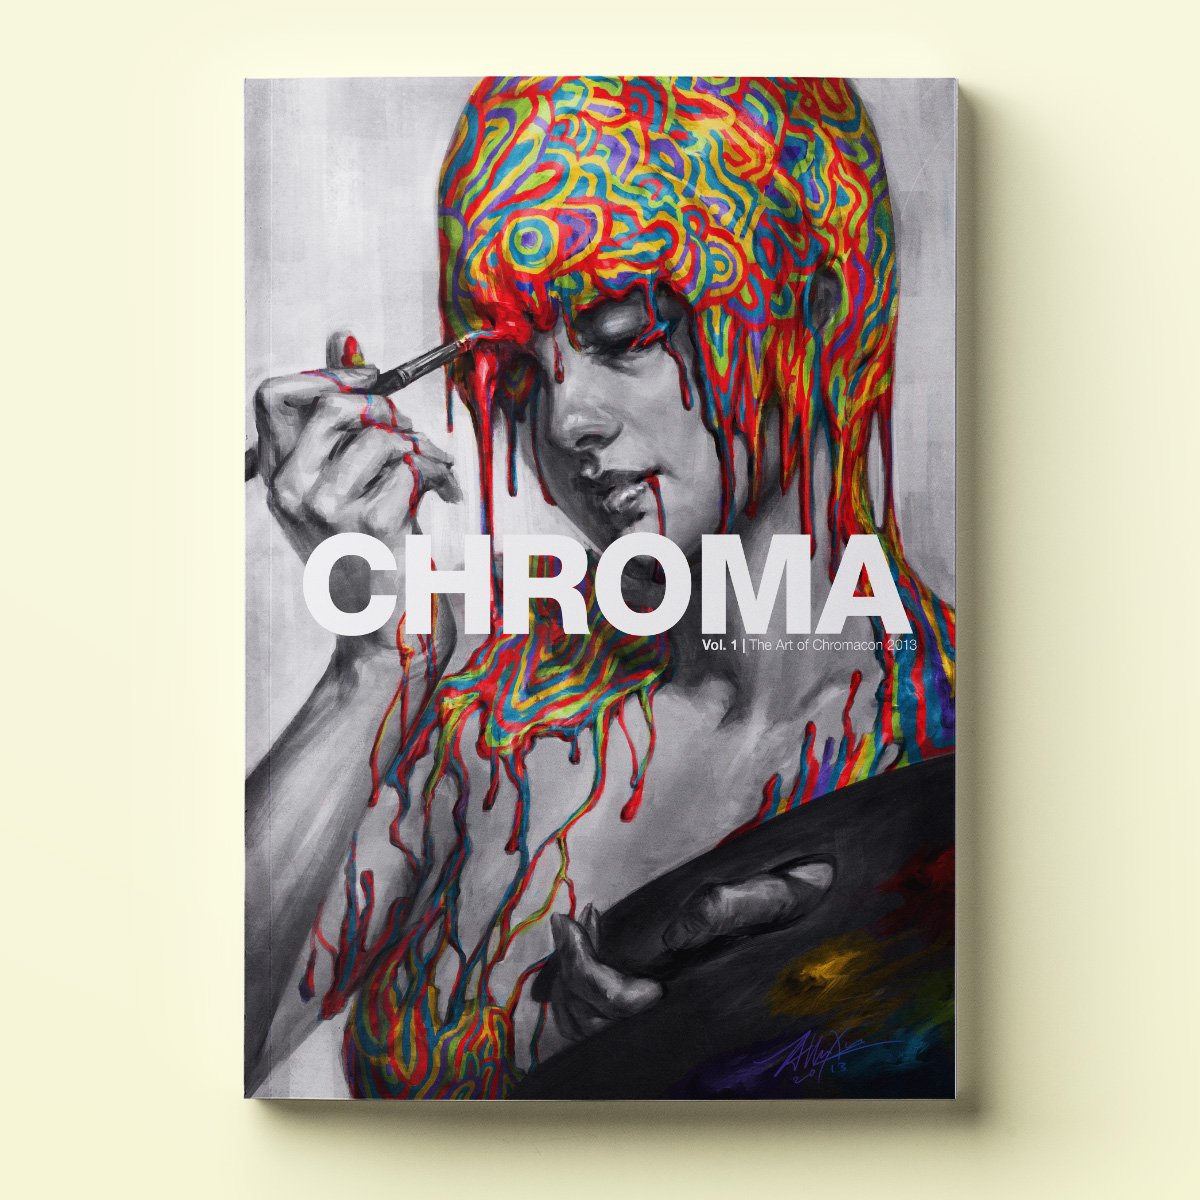 CHROMA Vol. 1: The Art of Chromacon 2013